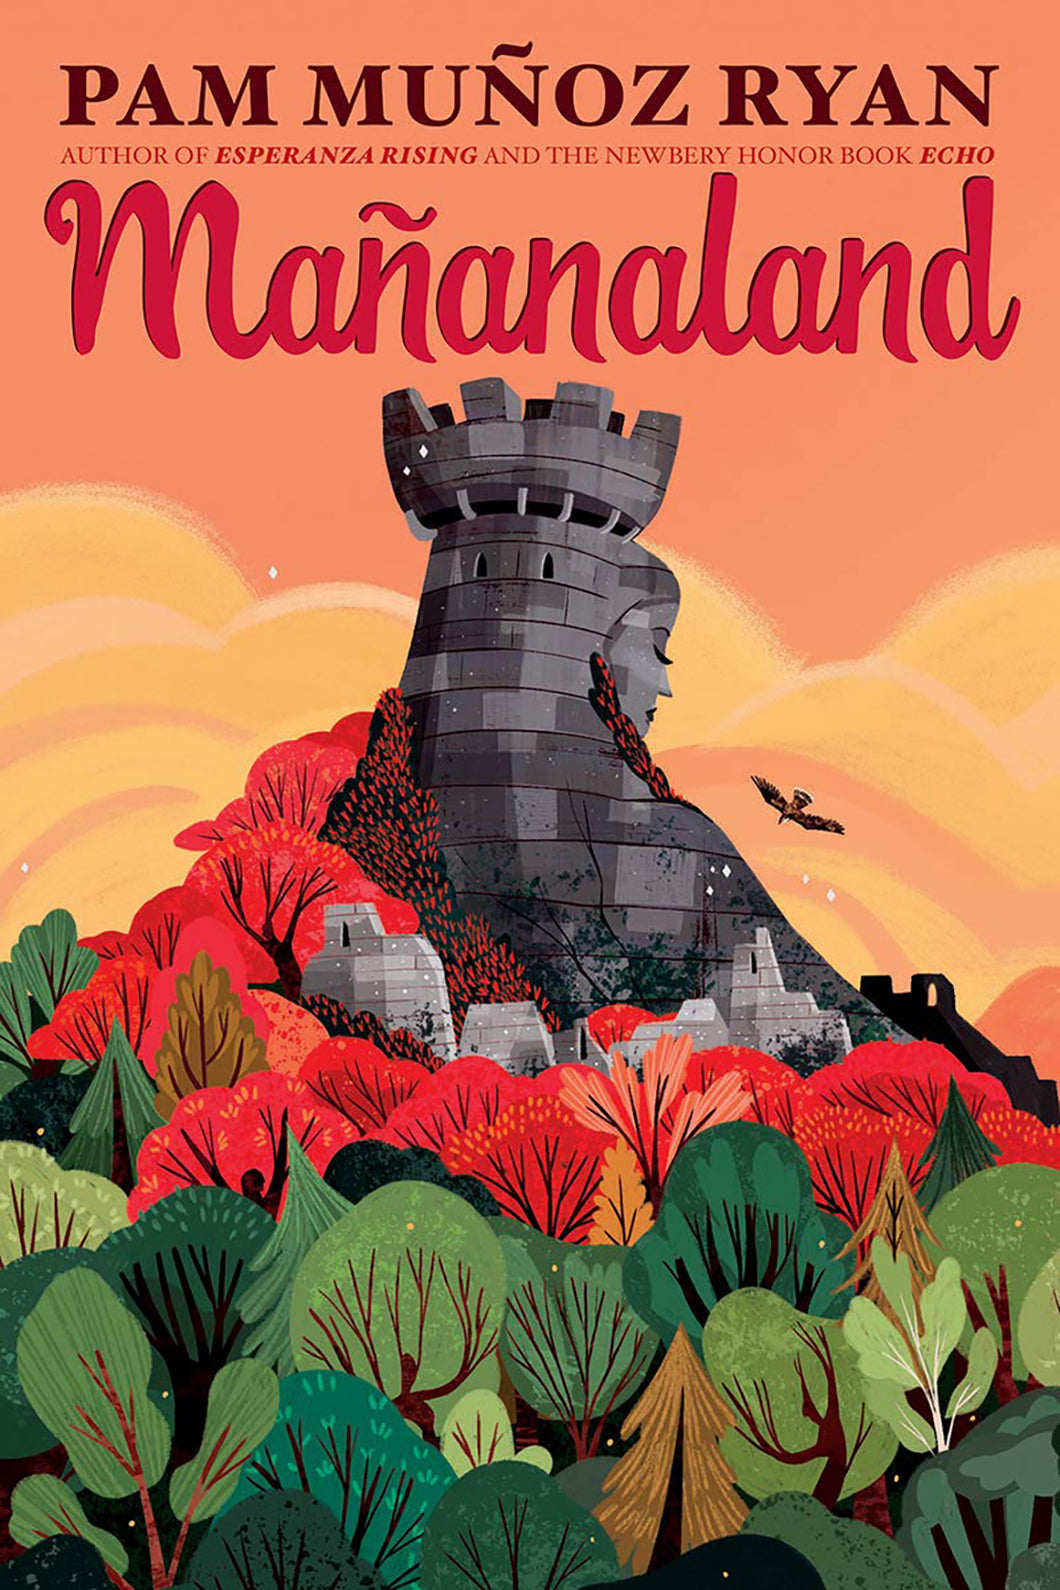 Mañanaland by Pam Muñoz Ryan / Hardcover or Paperback - NEW BOOK (English or Spanish)